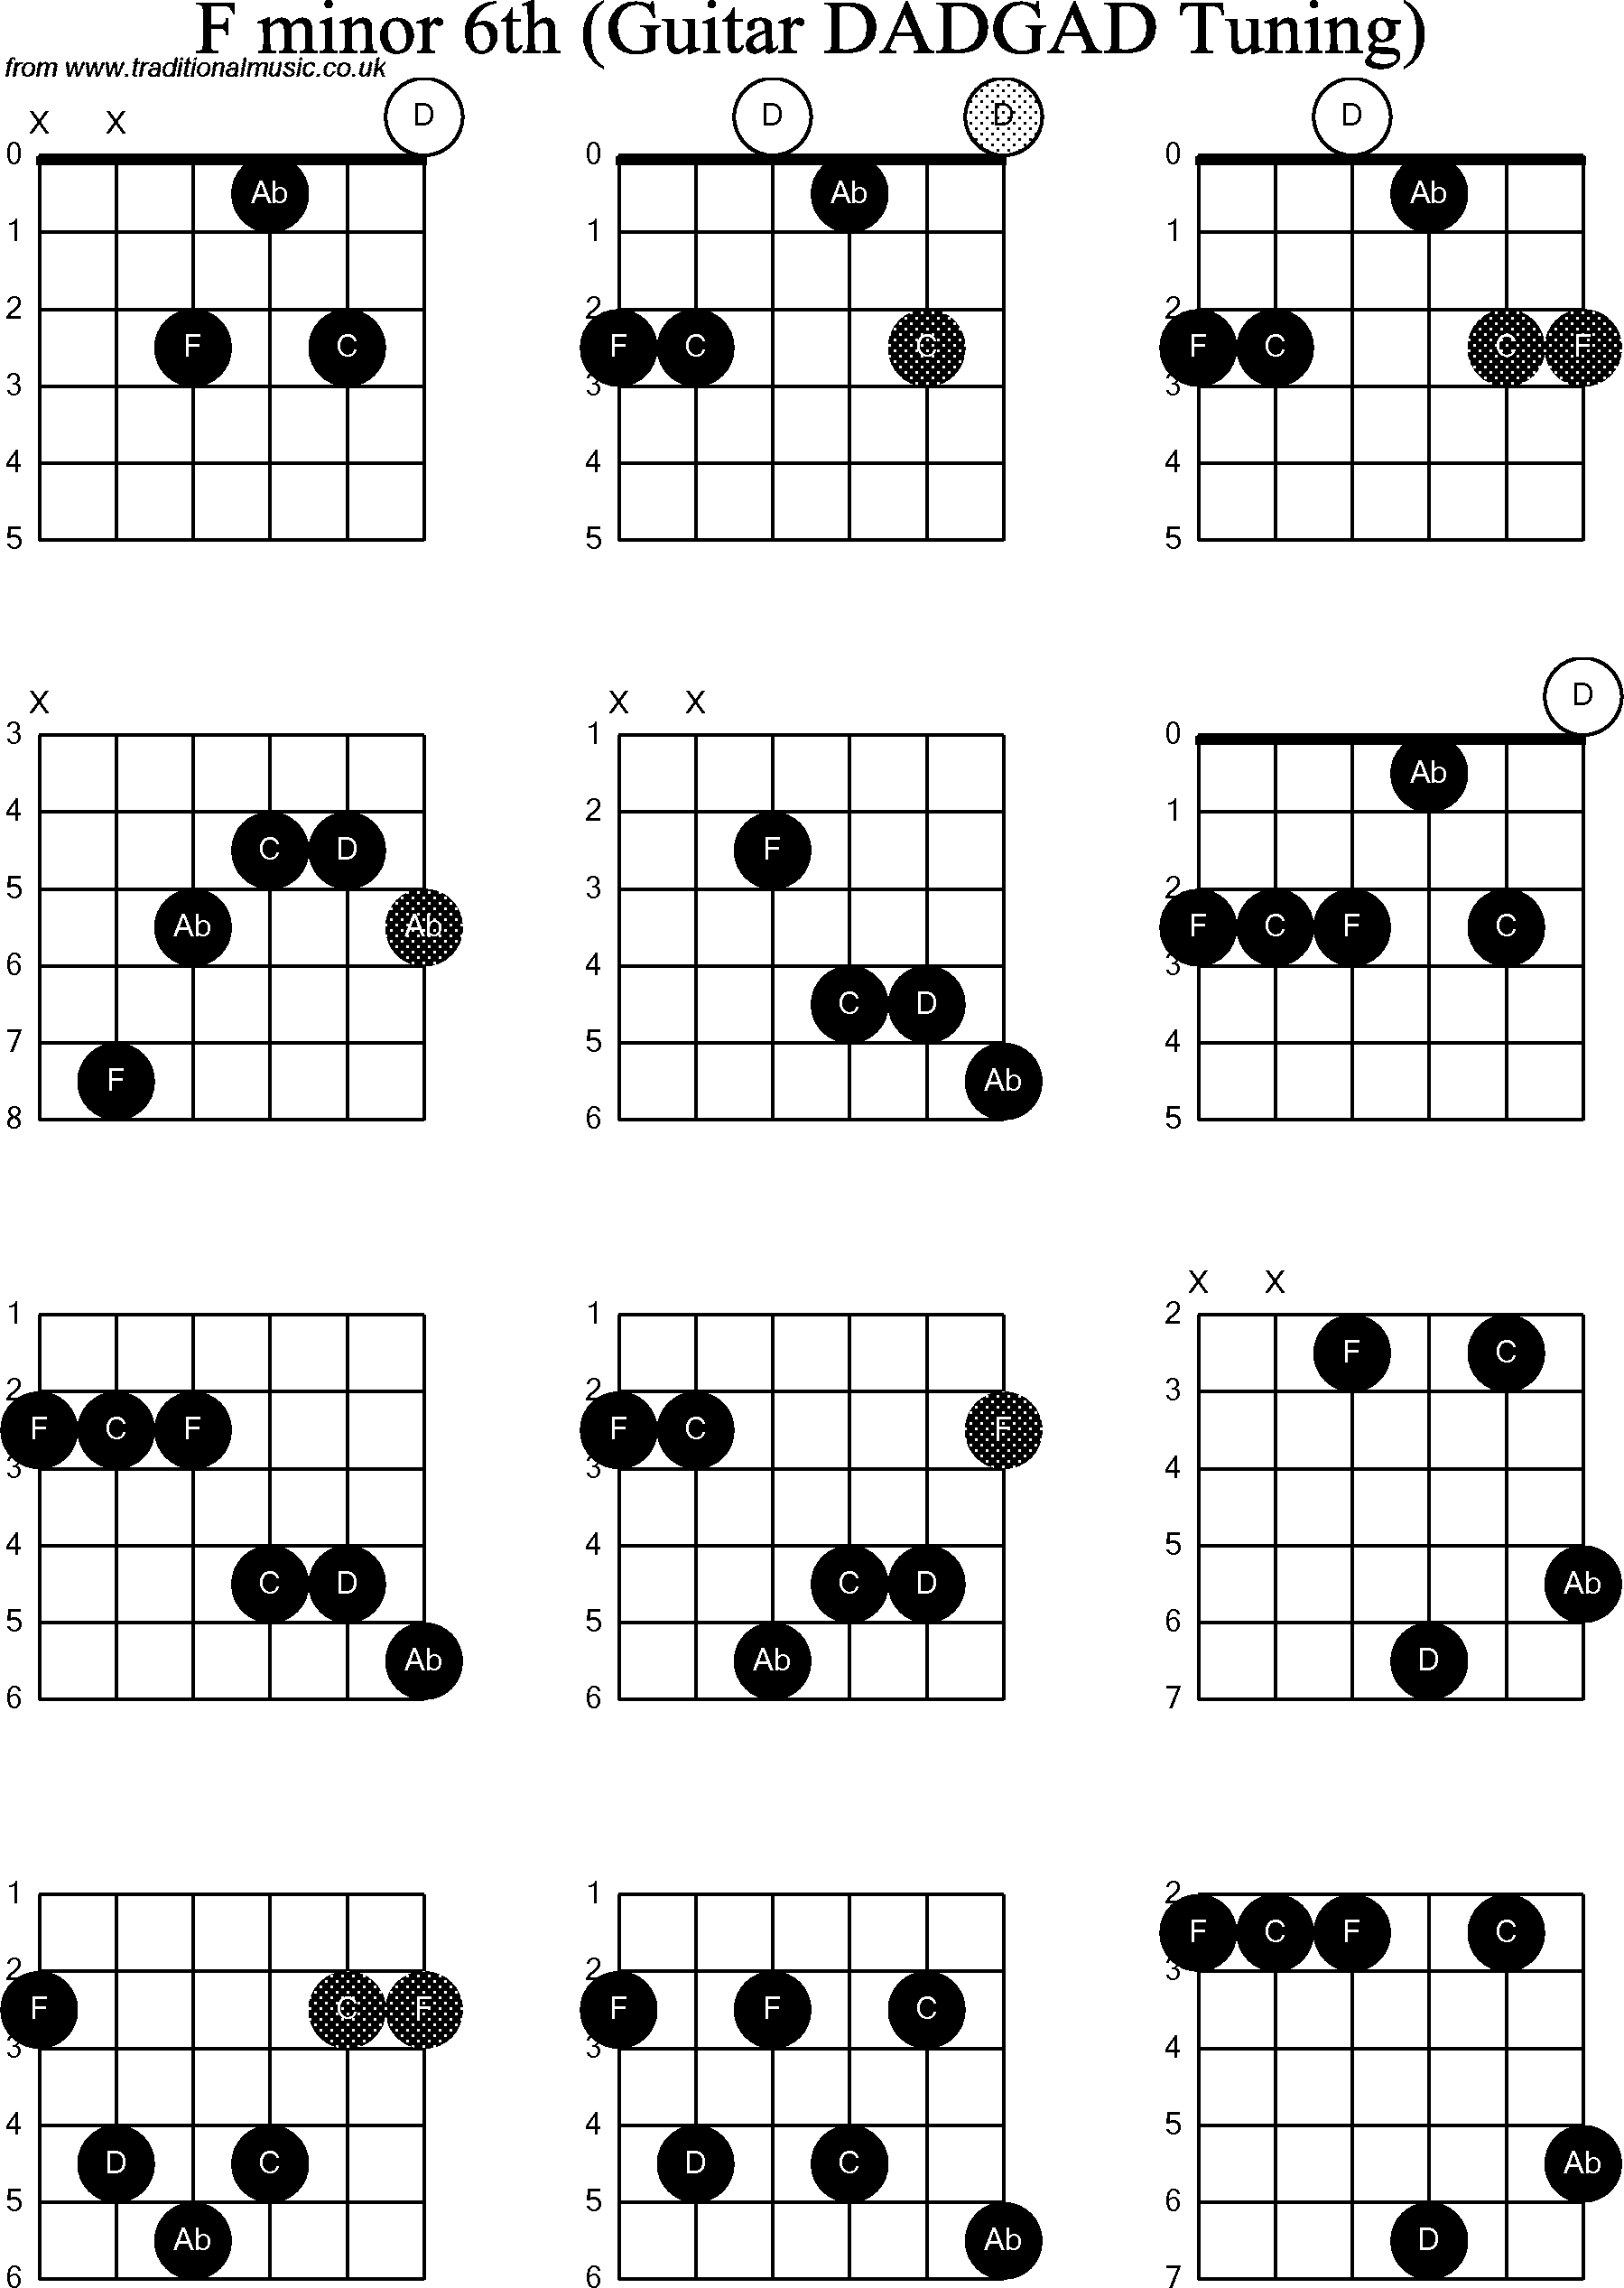 Chord Diagrams for D Modal Guitar(DADGAD), F Minor6th